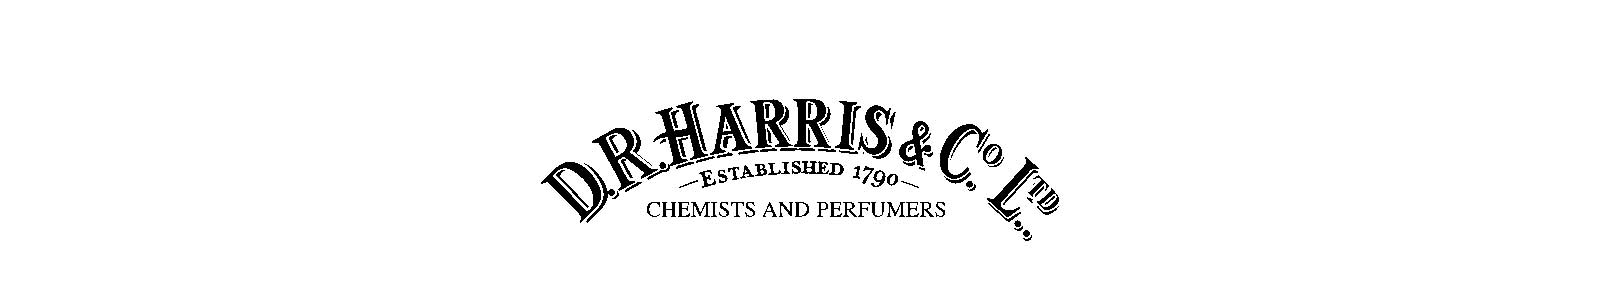 Dr Harris